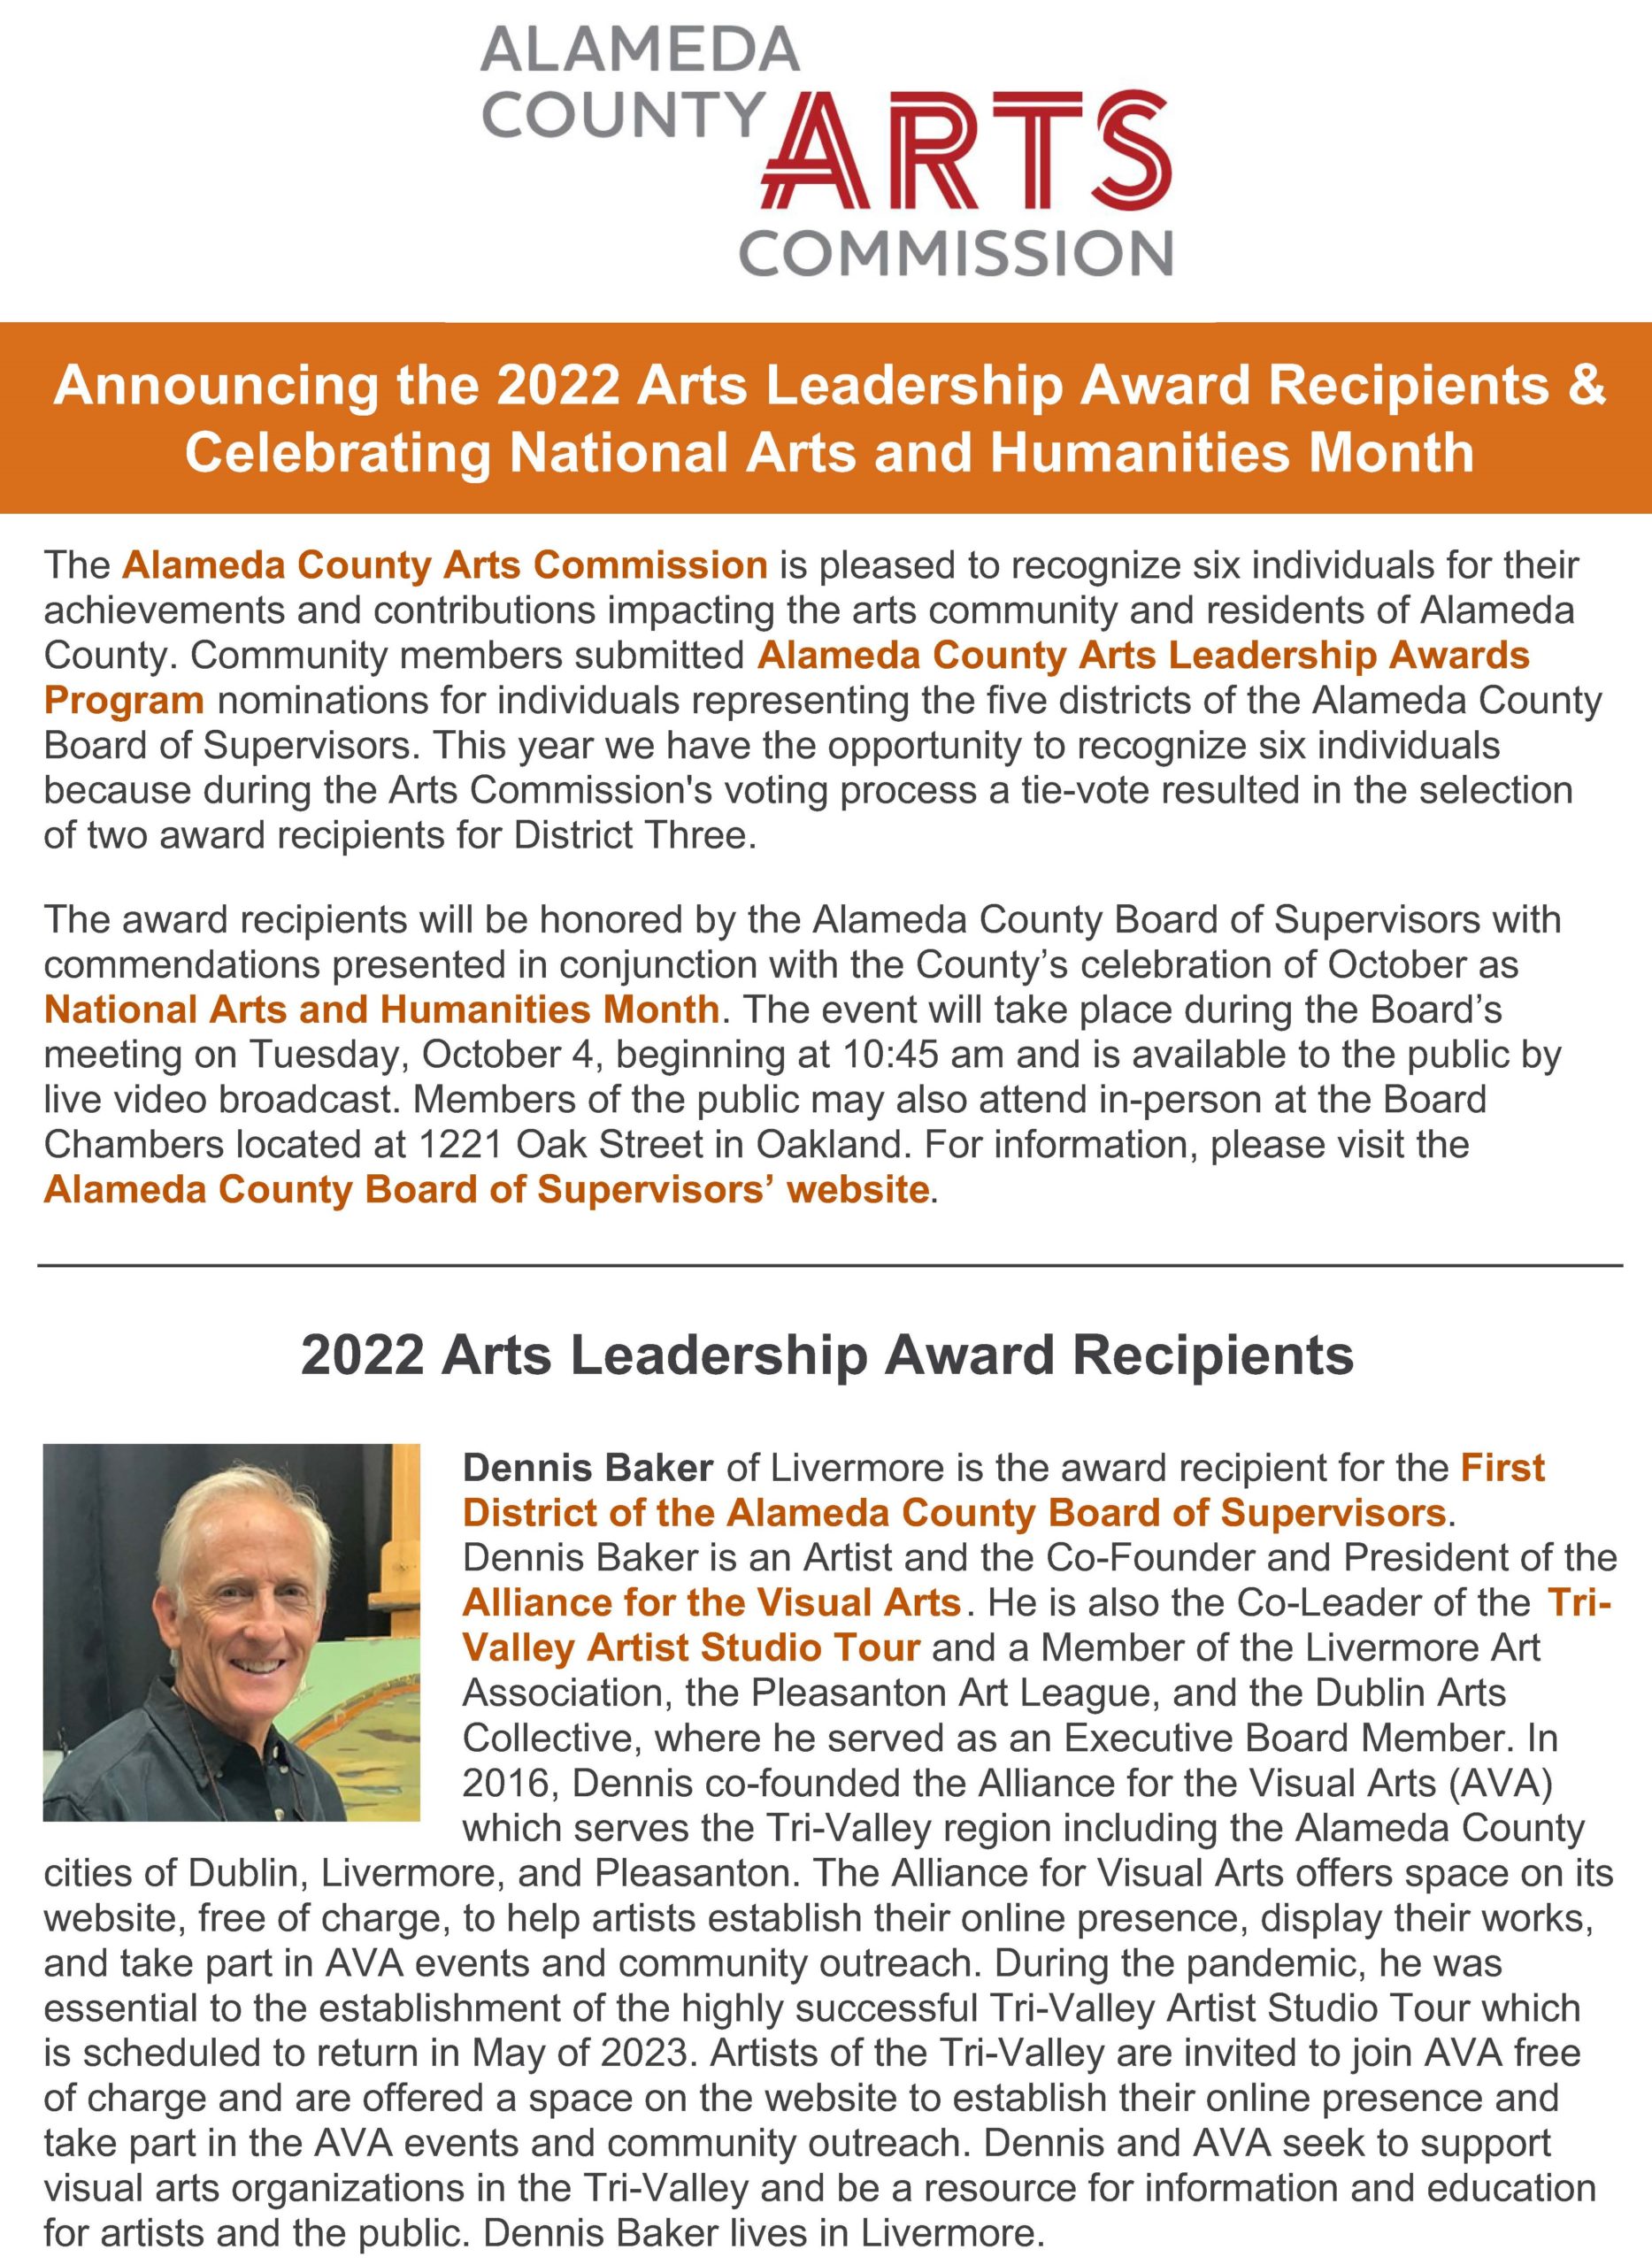 Announcing the 2022 Arts Leadership Awards Recipients